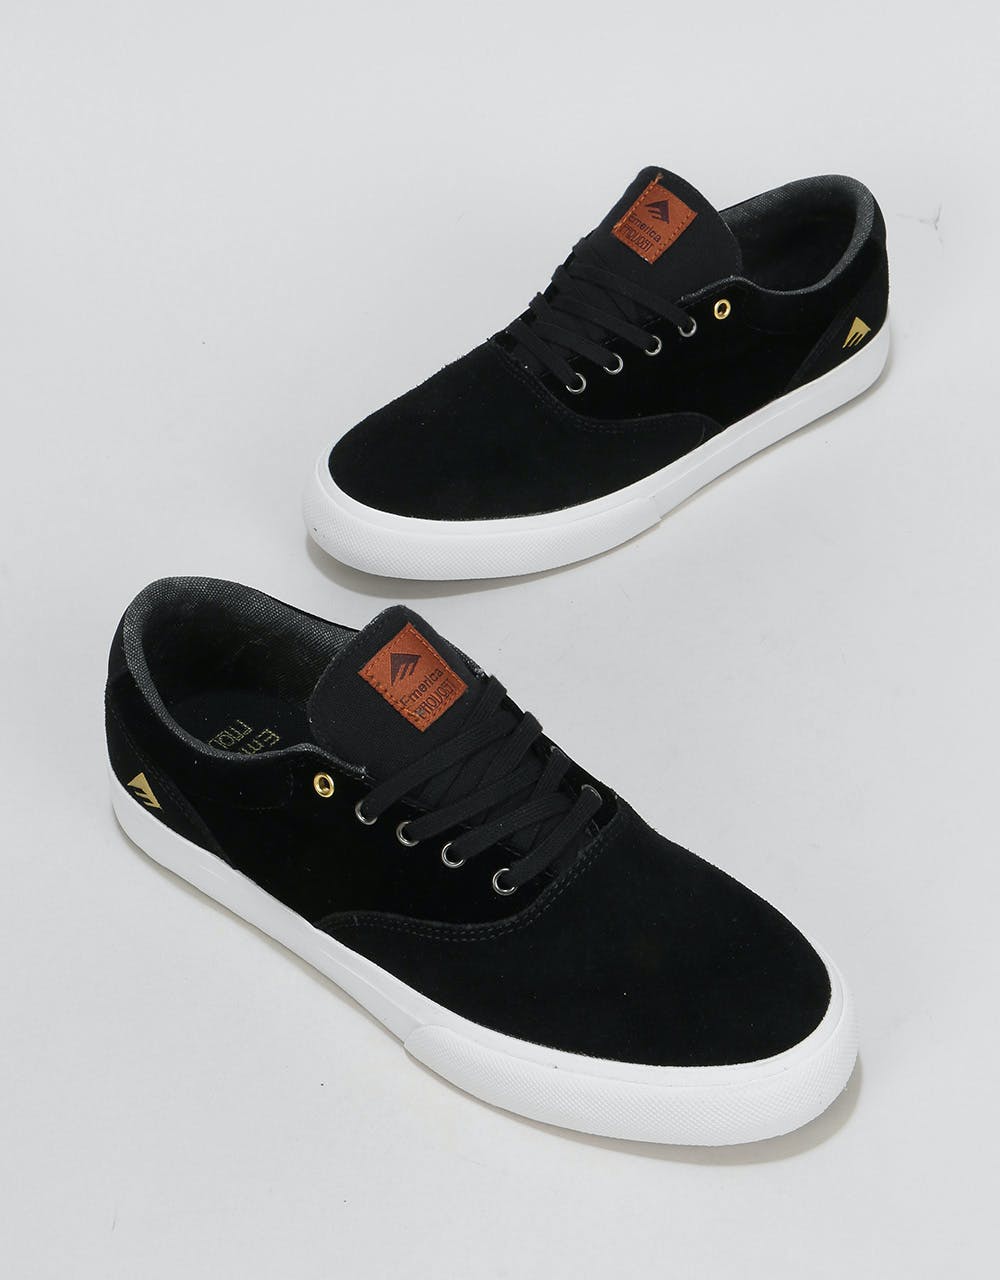 Emerica Provost Slim Vulc Skate Shoes - Black/White/Gum